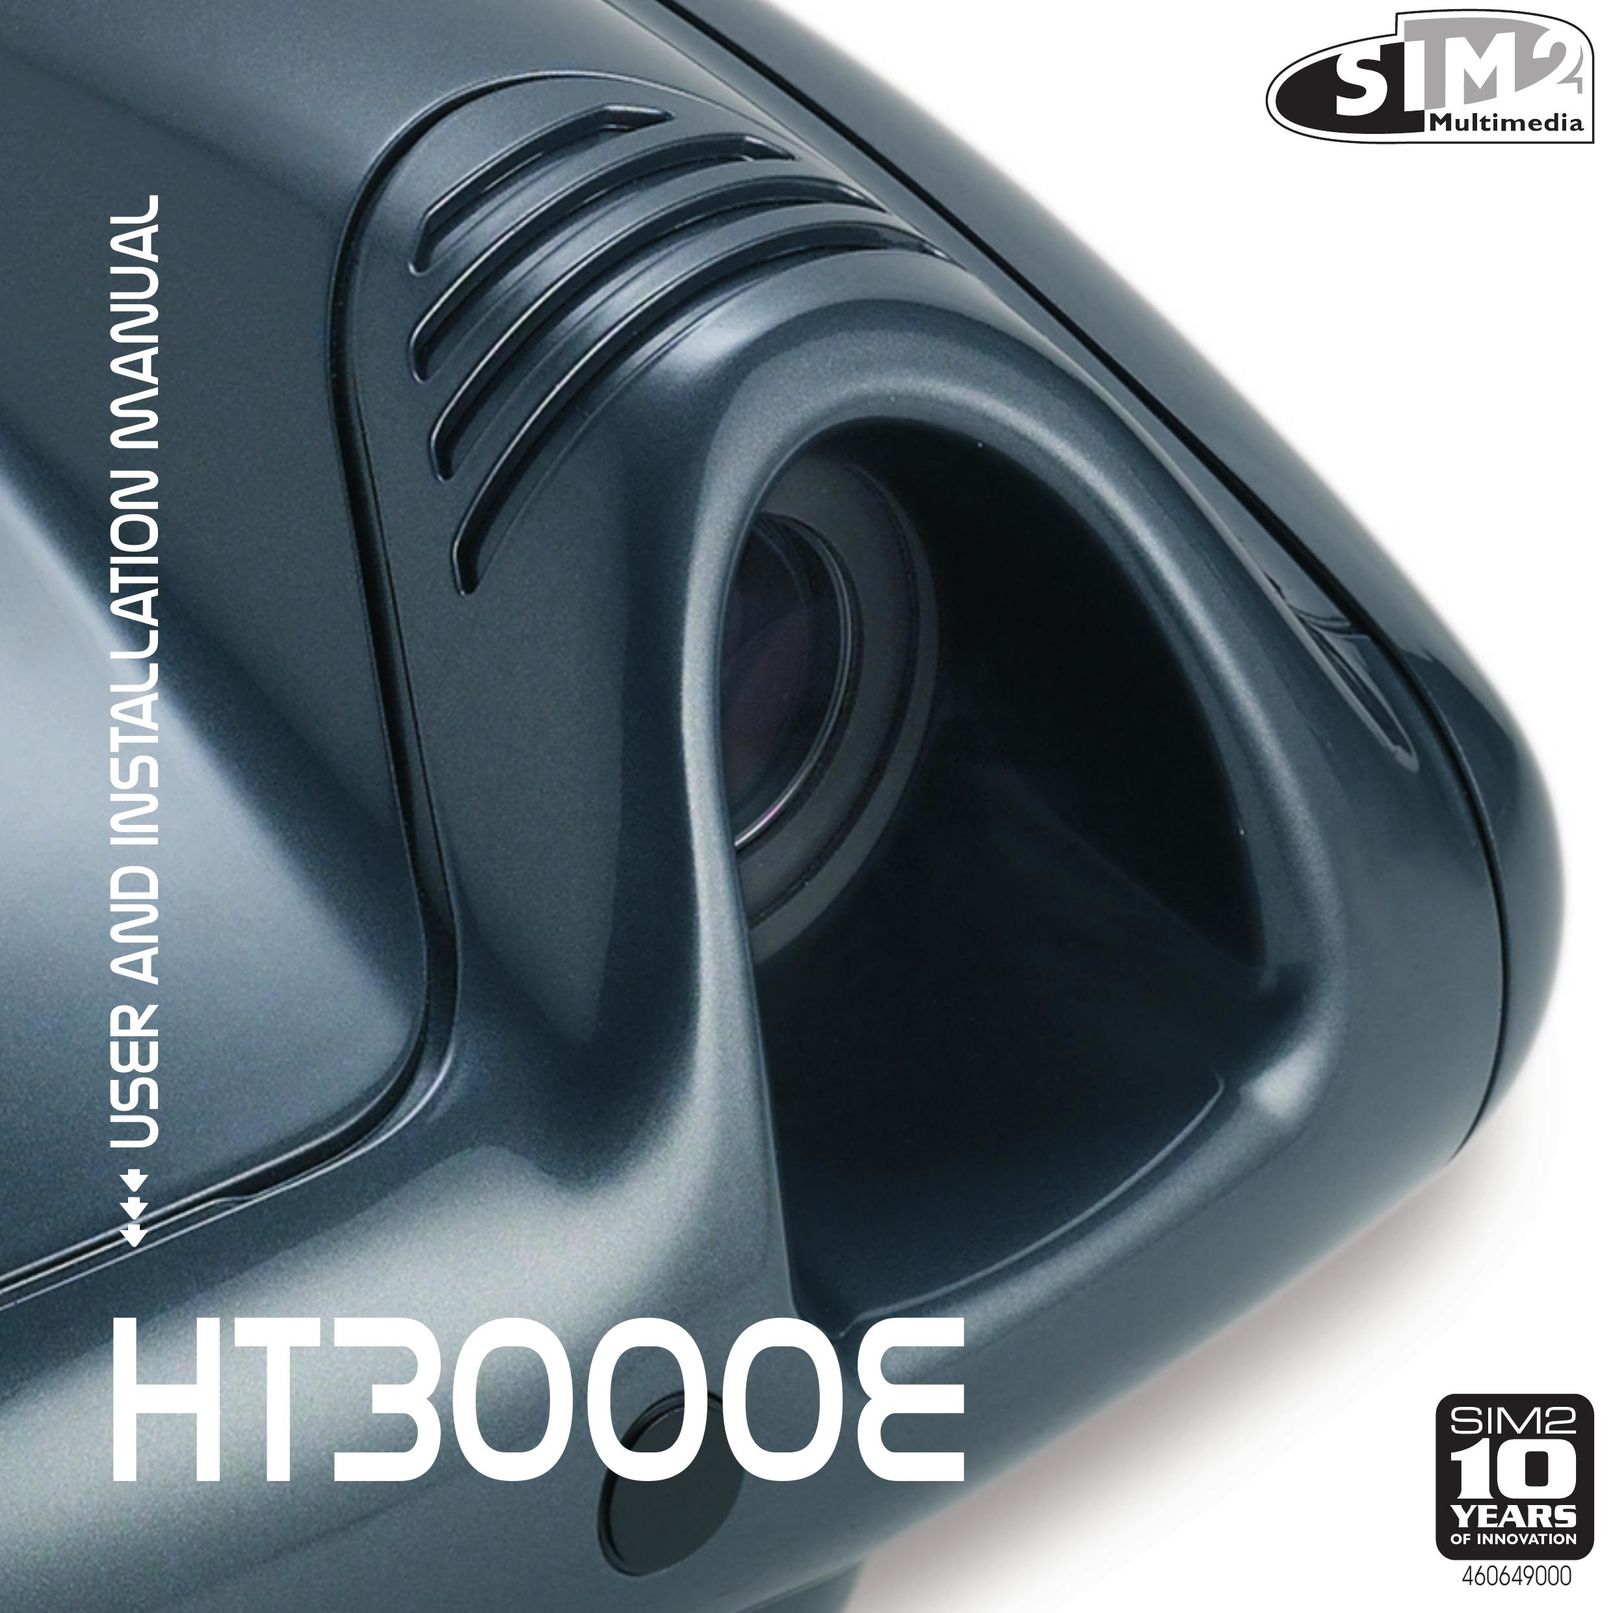 Sim2 Multimedia HT3000E Projector User Manual